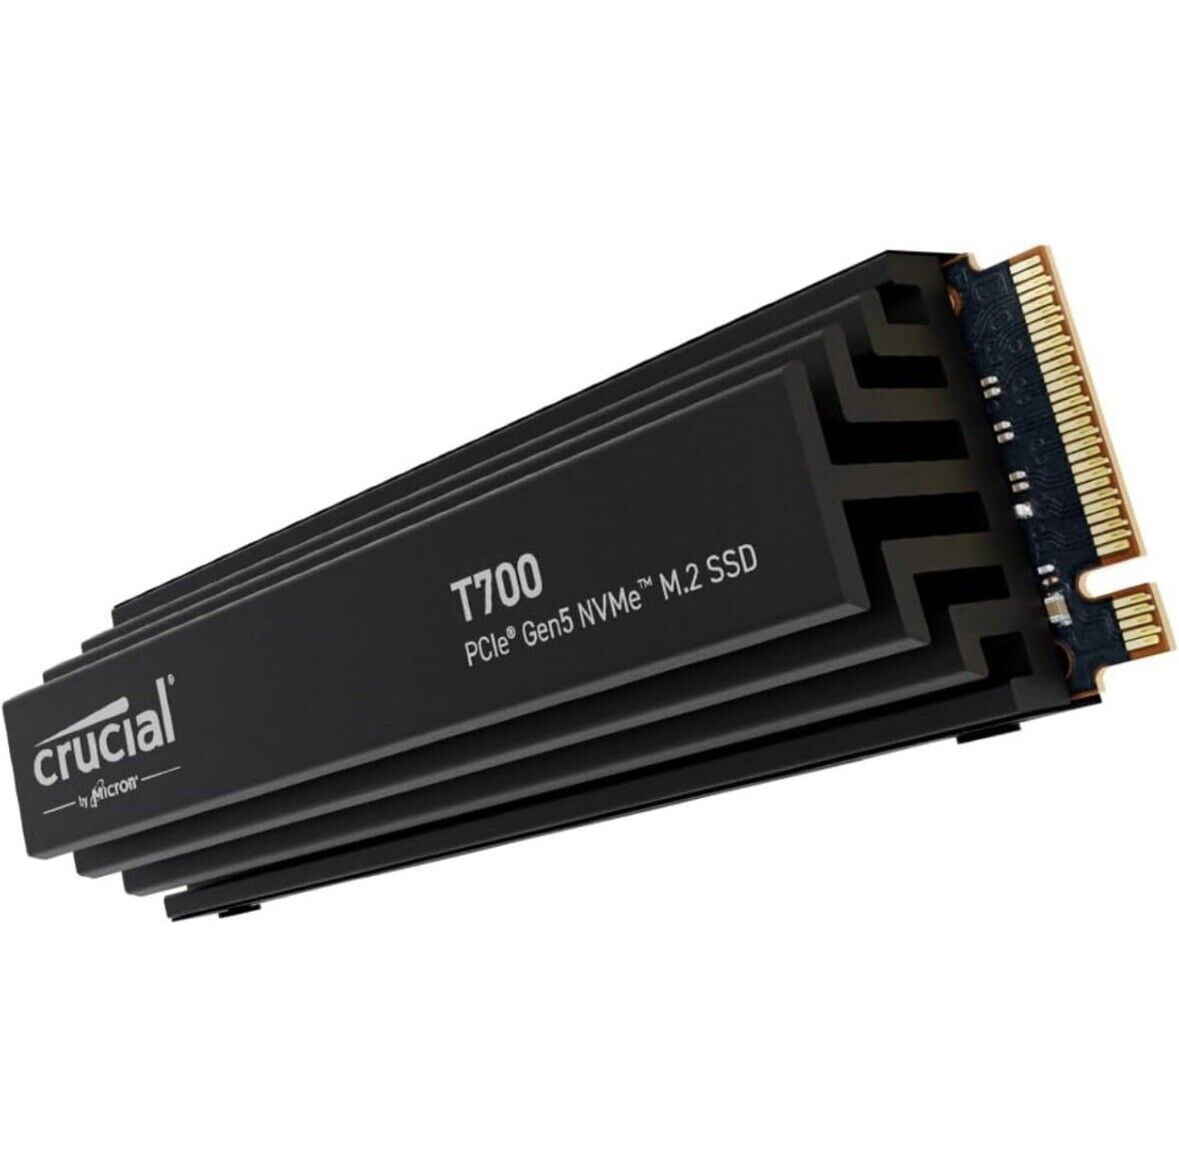 NEW OB Crucial T700 4TB SSD PCIe Gen 5x4 NVMe with Heatsink (CT4000T700SSD5)